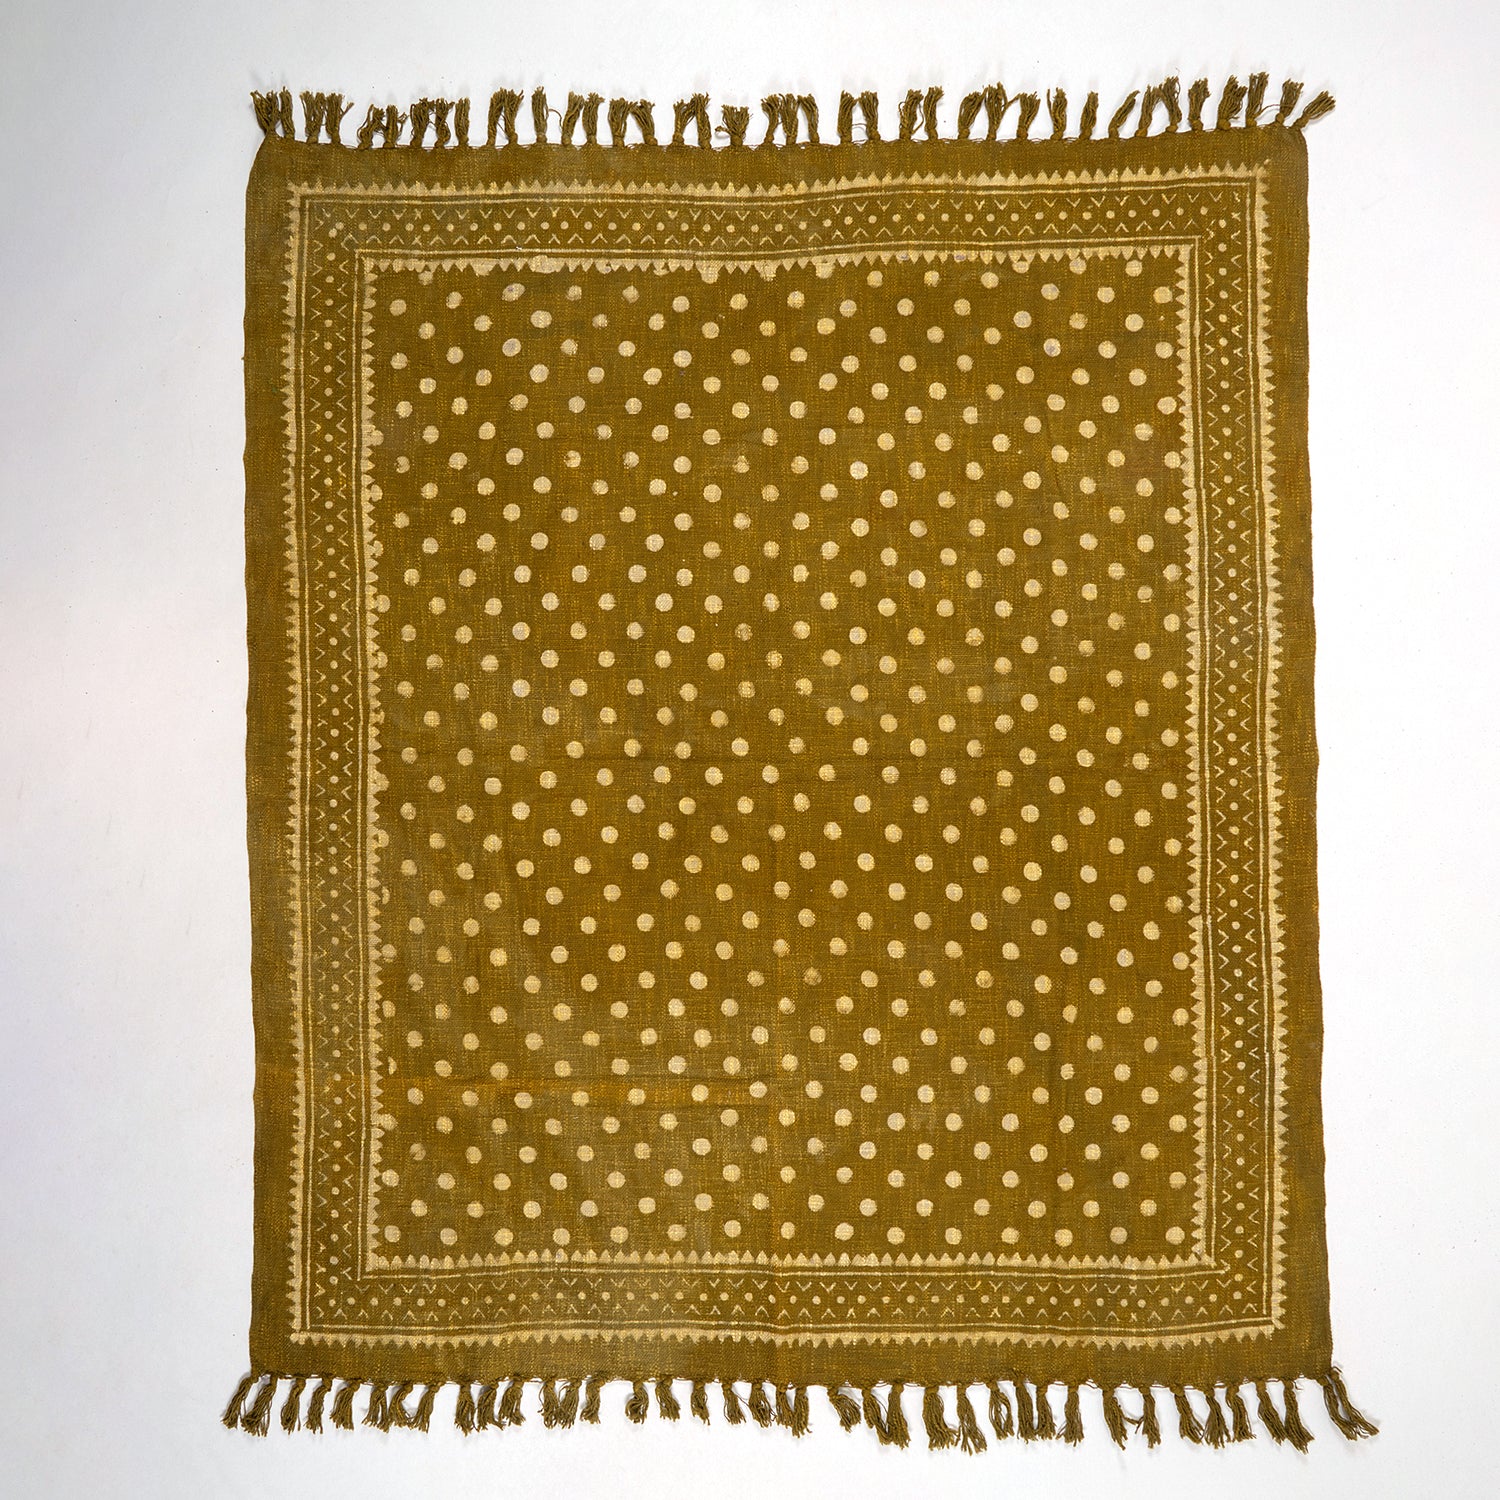 Brown Polka Dots Decorative Cotton Blanket Online